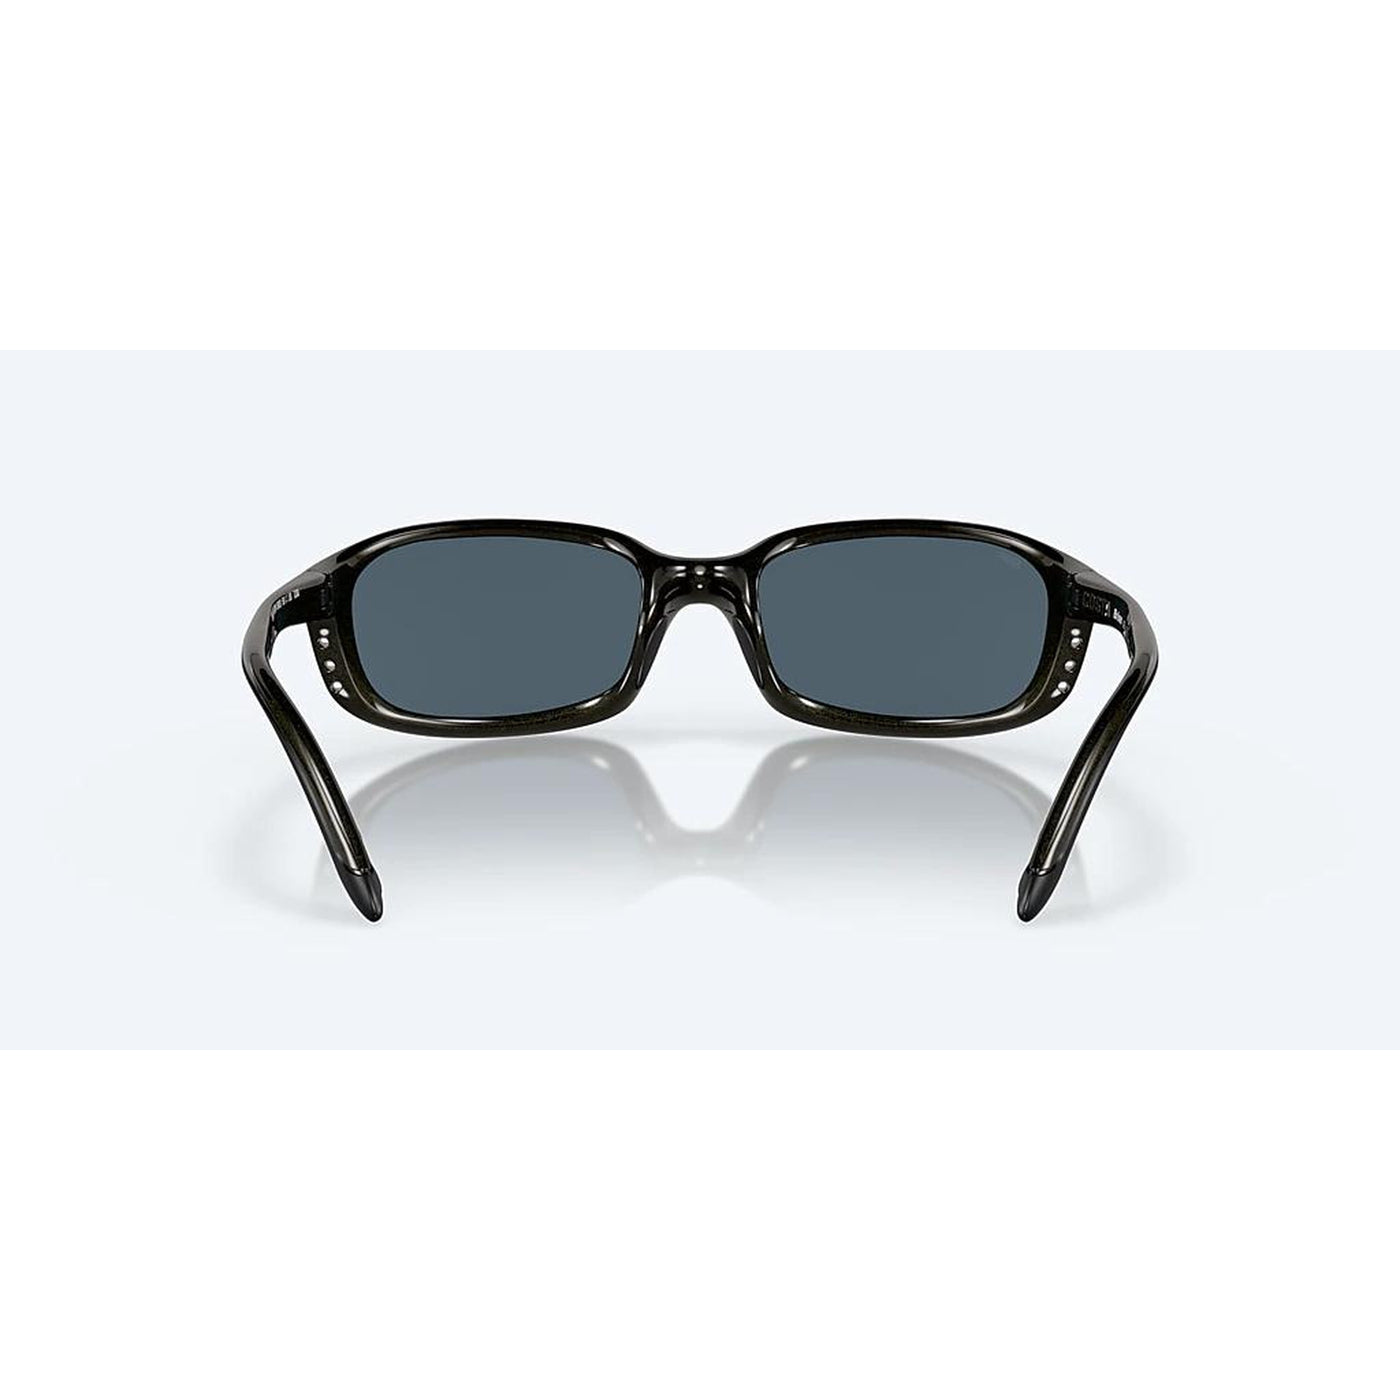 Costa Brine-Sunglasses-Topline Eyewear